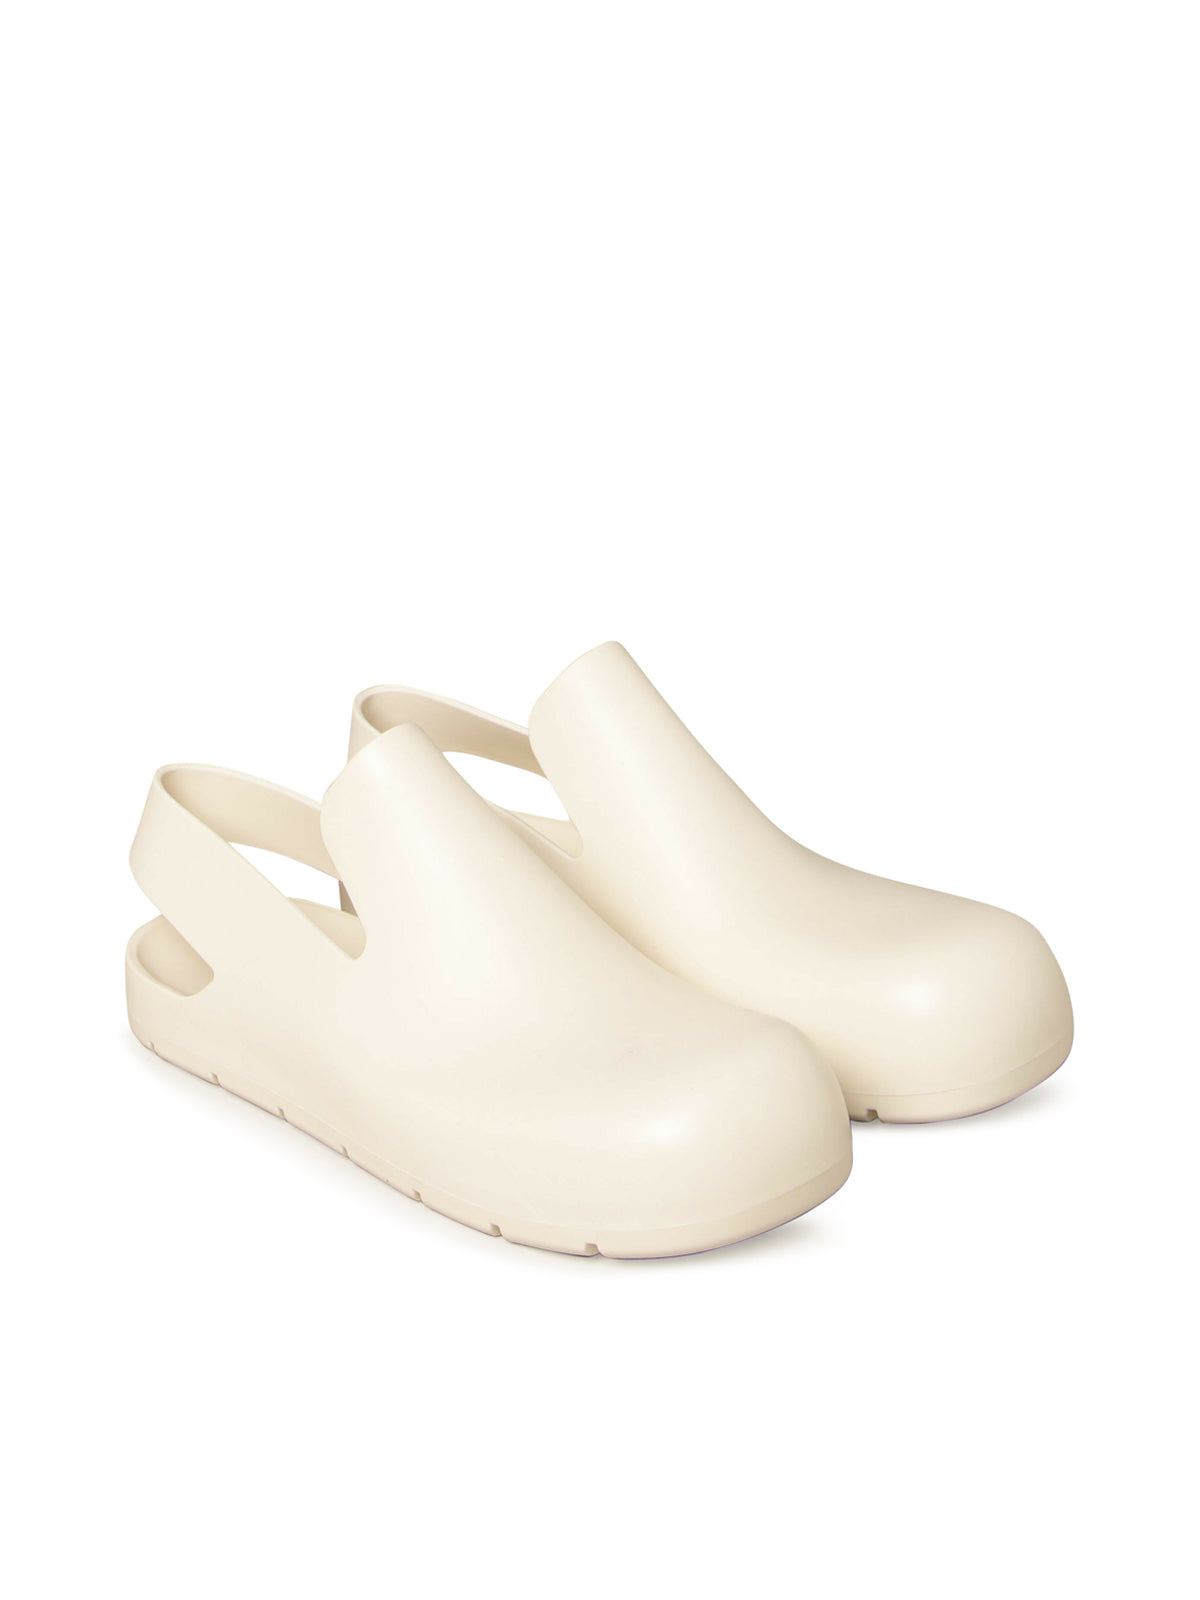 Puddle rubber sandal